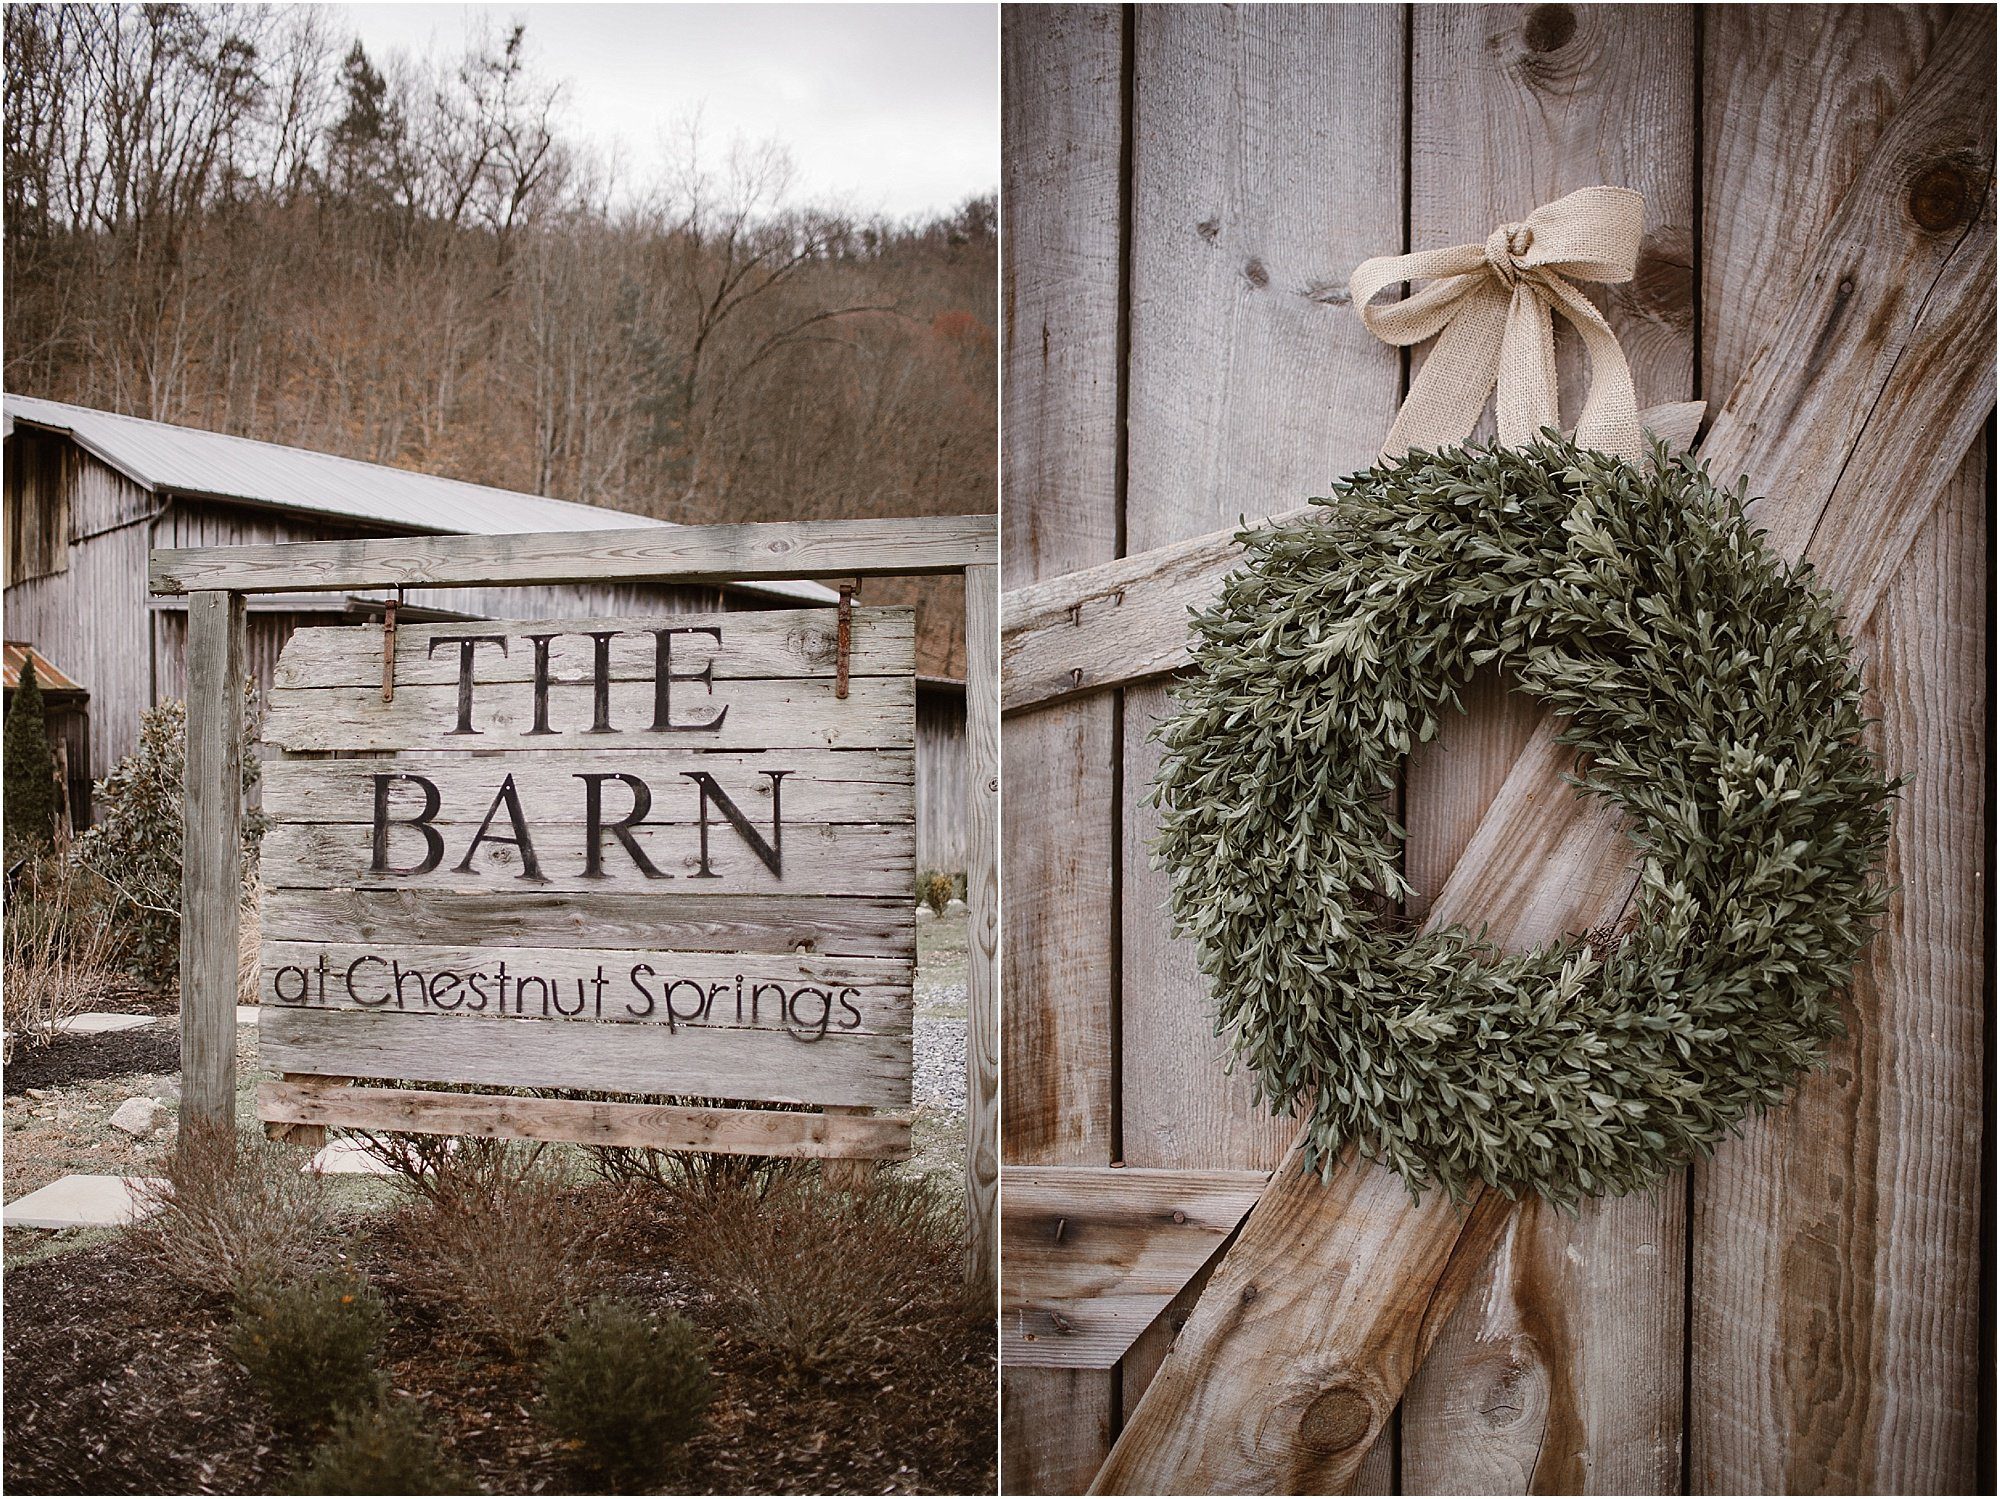 The Barn at Chestnut Springs | Erin Morrison Photography www.erinmorrisonphotography.com